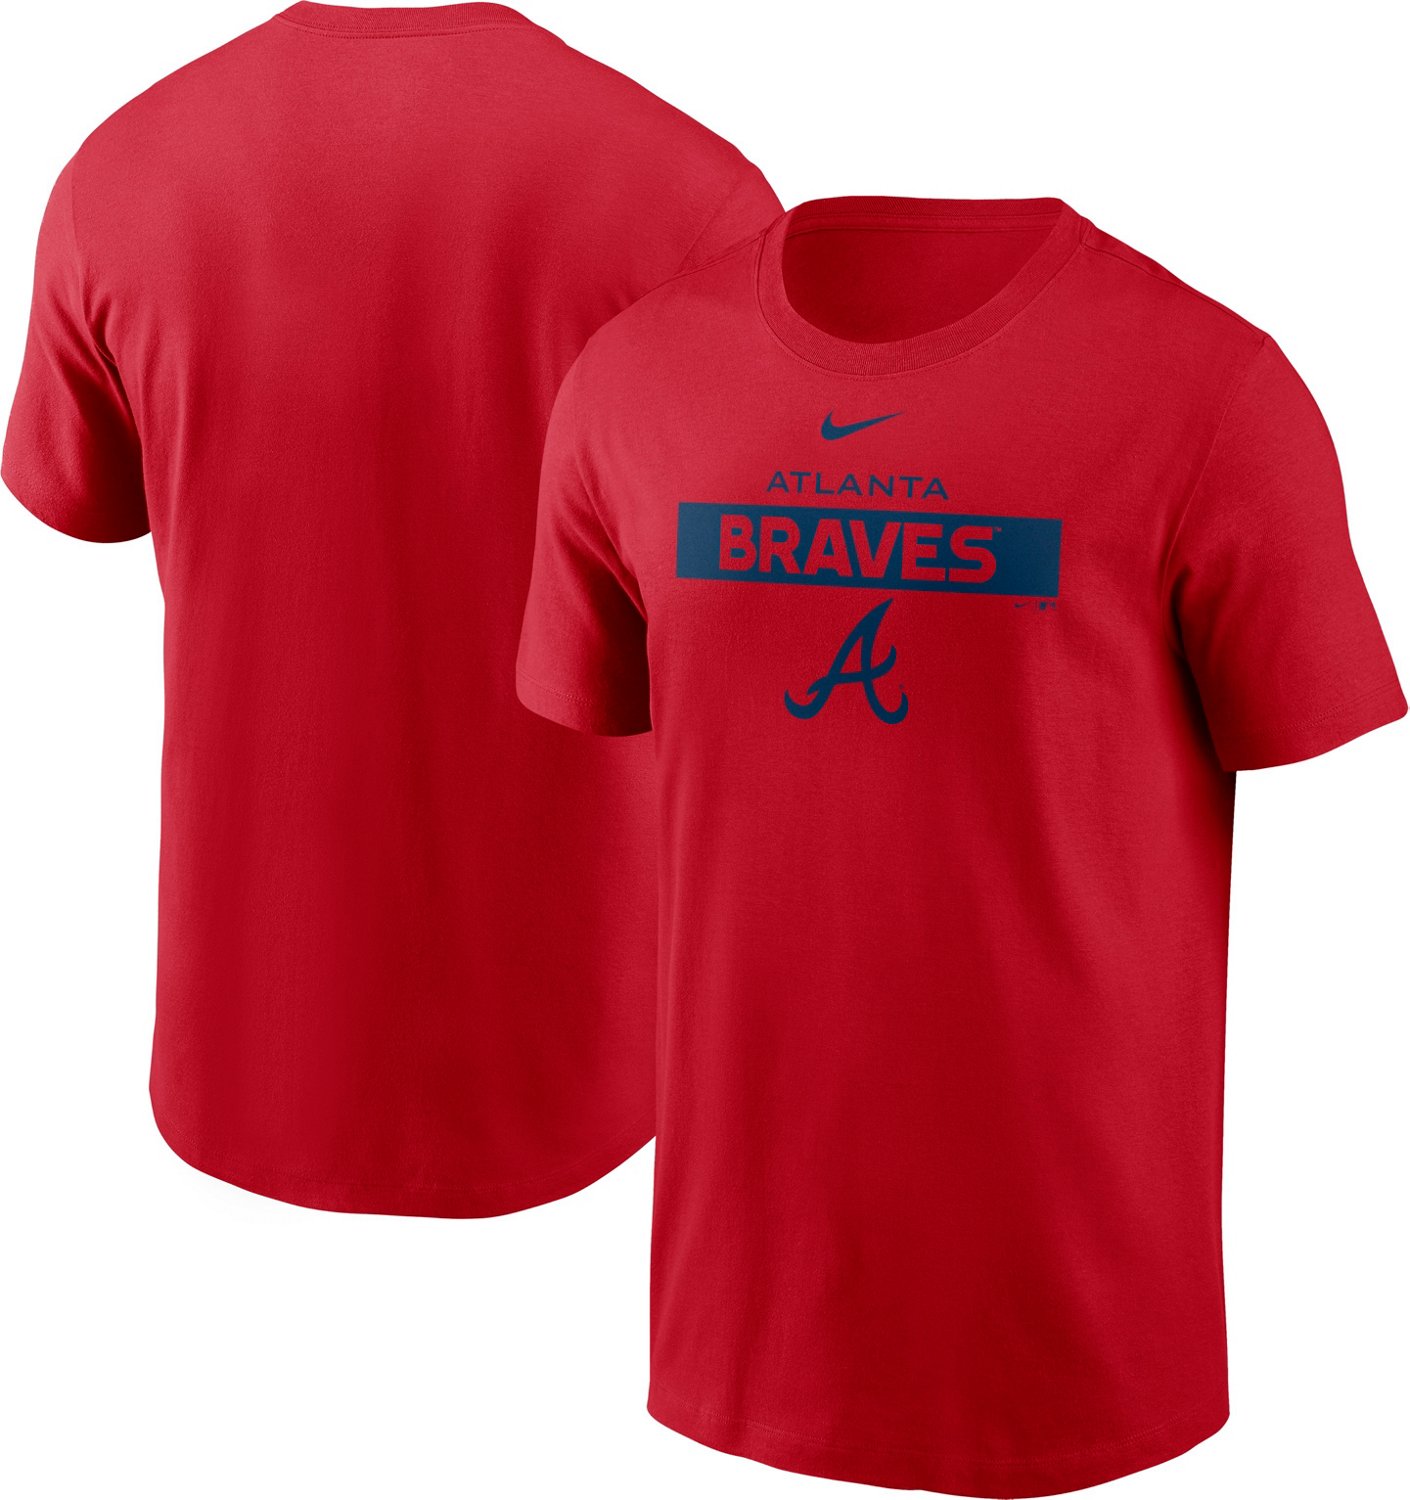 Nike Men's Atlanta Braves MLB Shirts